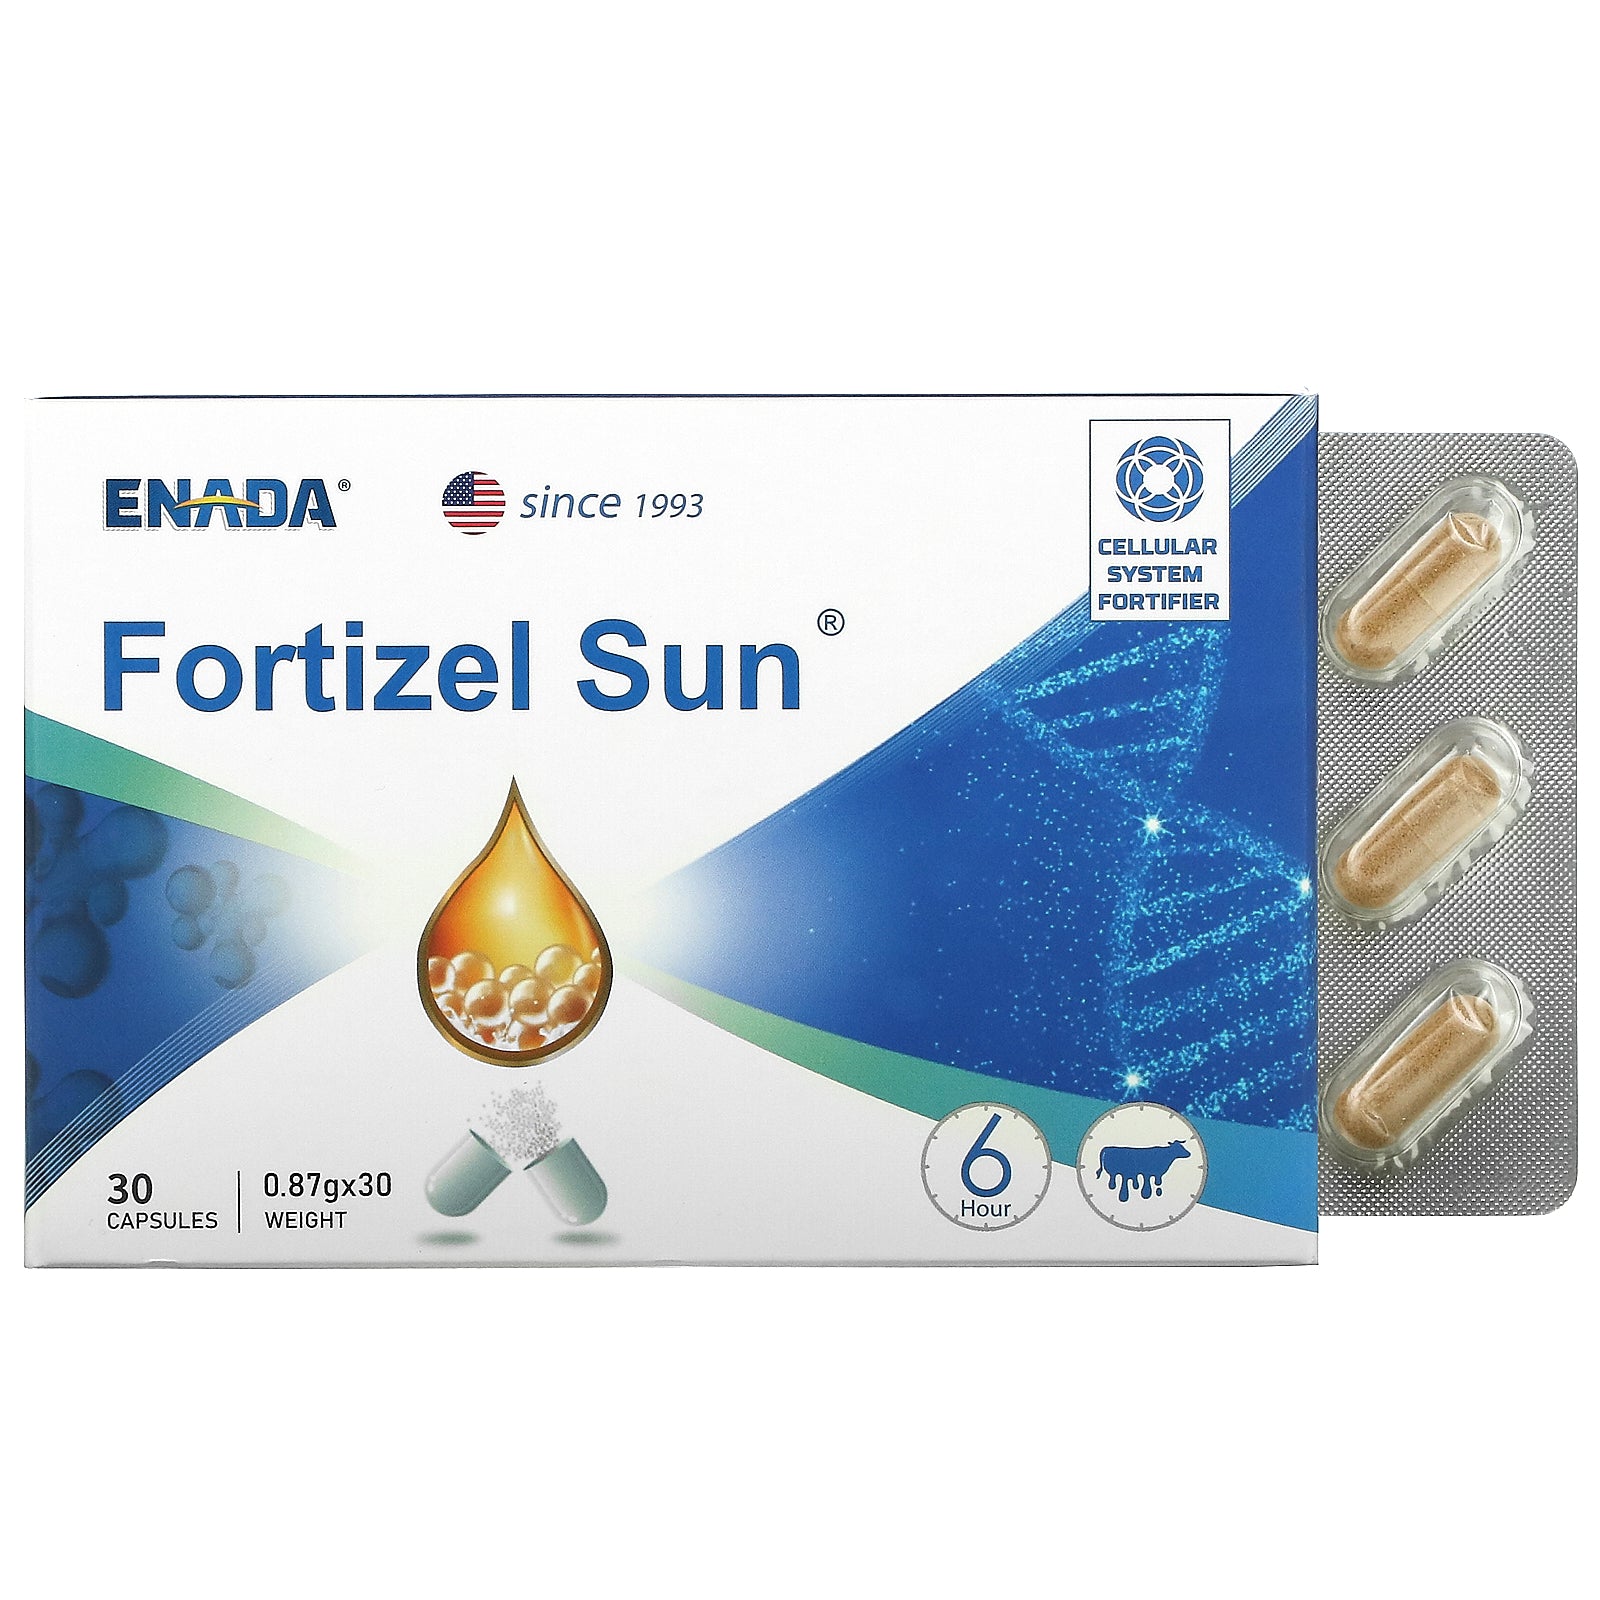 ENADA, Fortizel Sun, Cellular System Fortifier Capsules